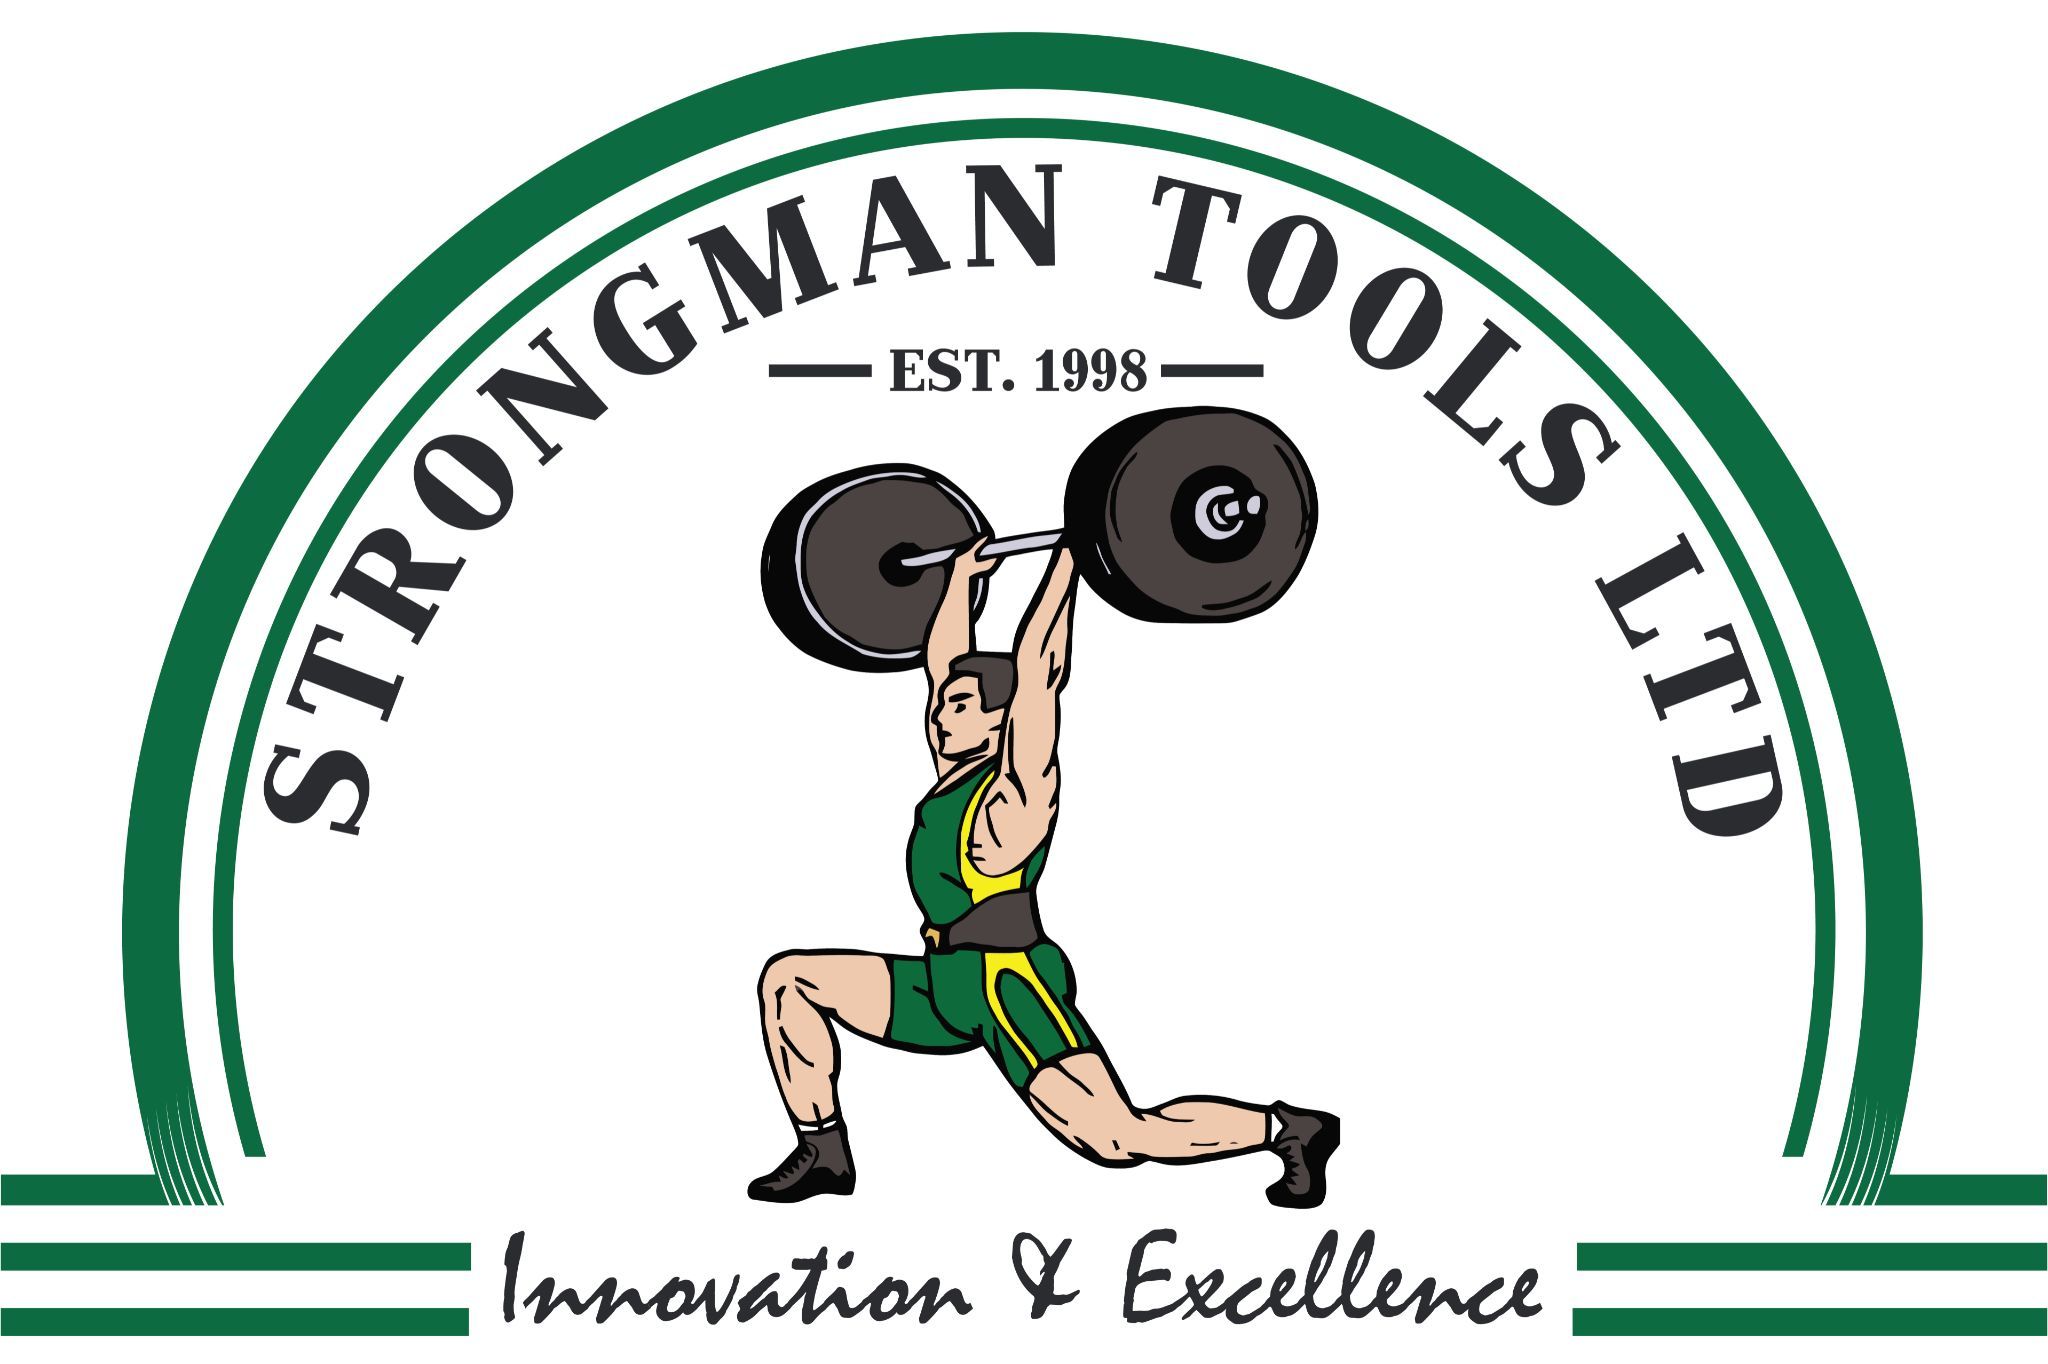 Strongman Tools logo